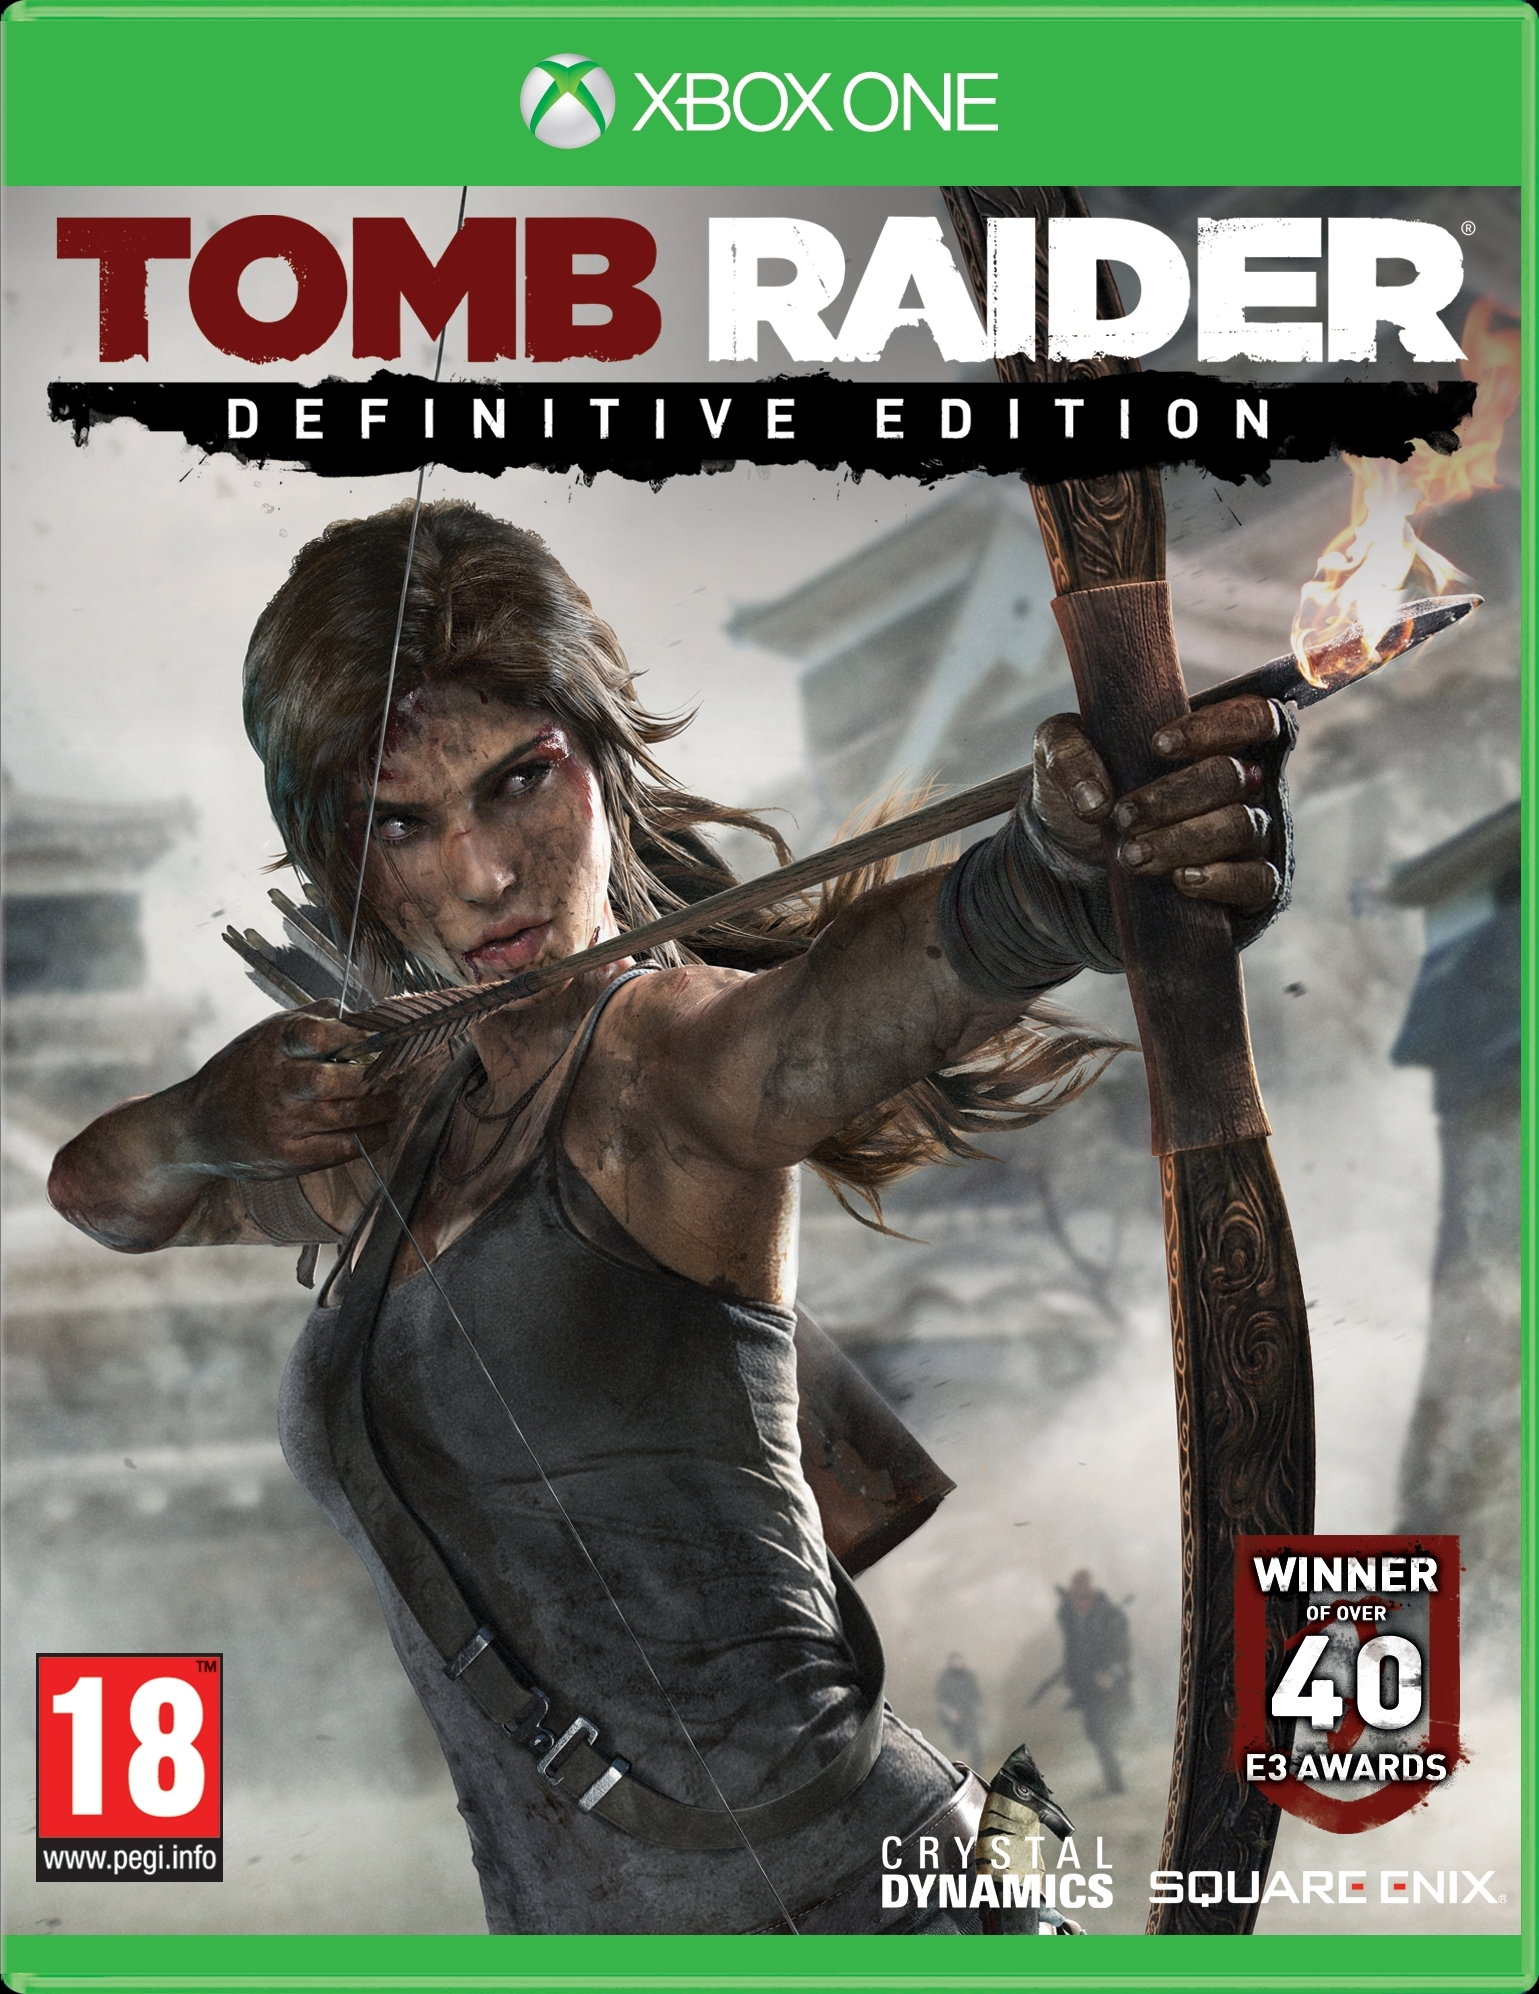 Купить Tomb Raider Definitive Edition+F1 2017 XBOX ONE по низкой
                                                     цене